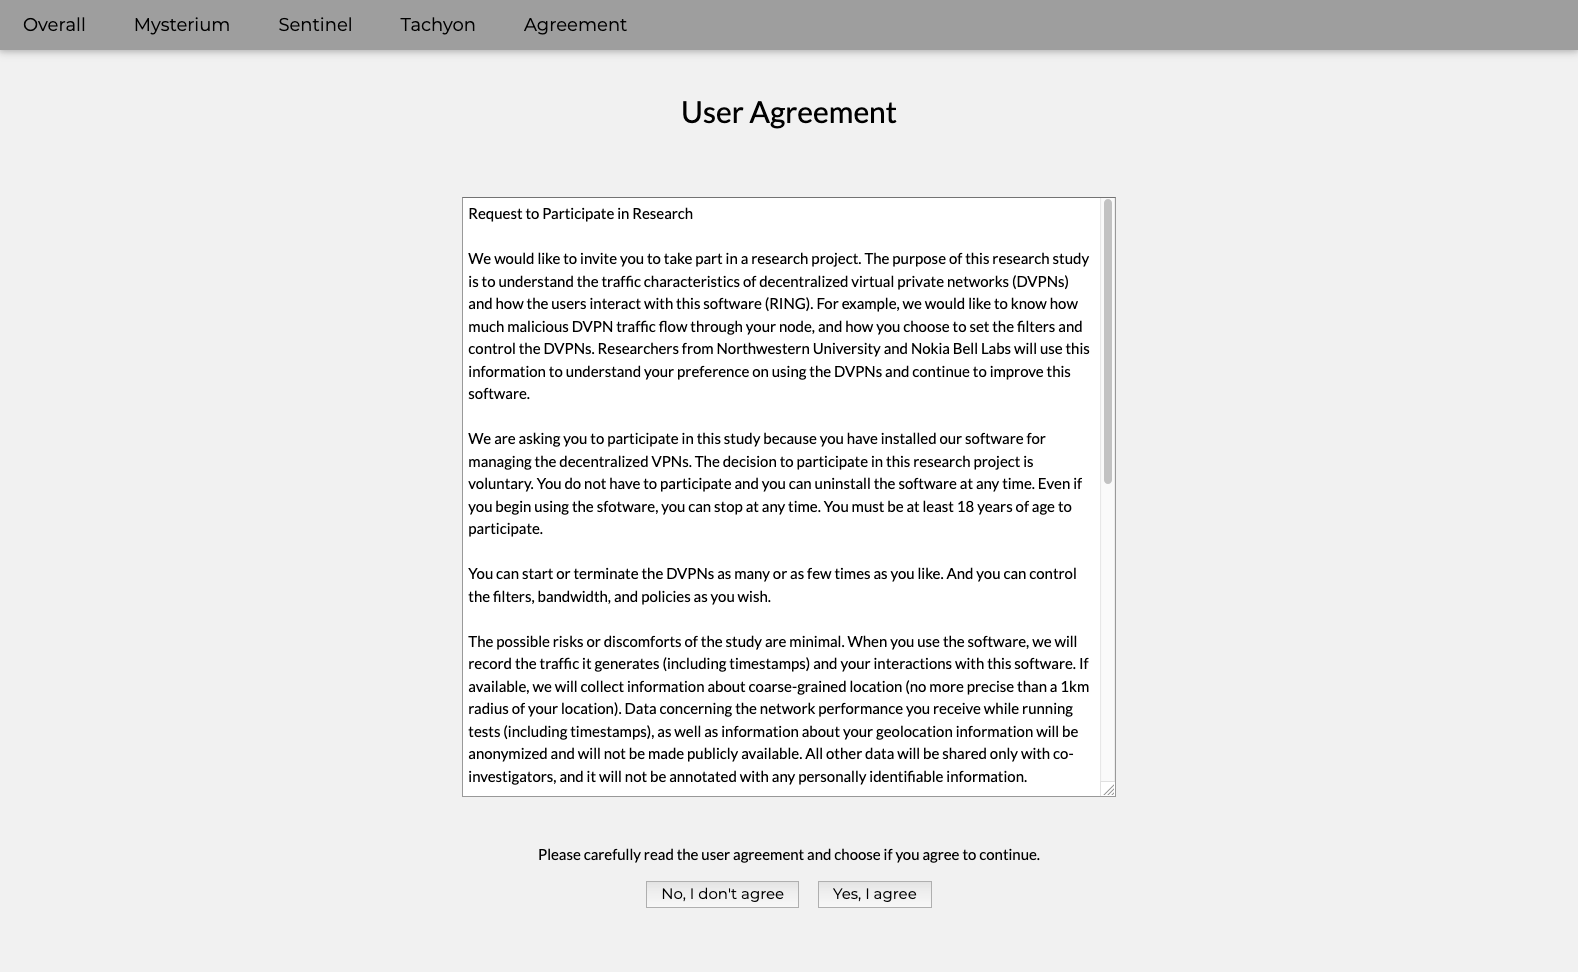 User Agreement